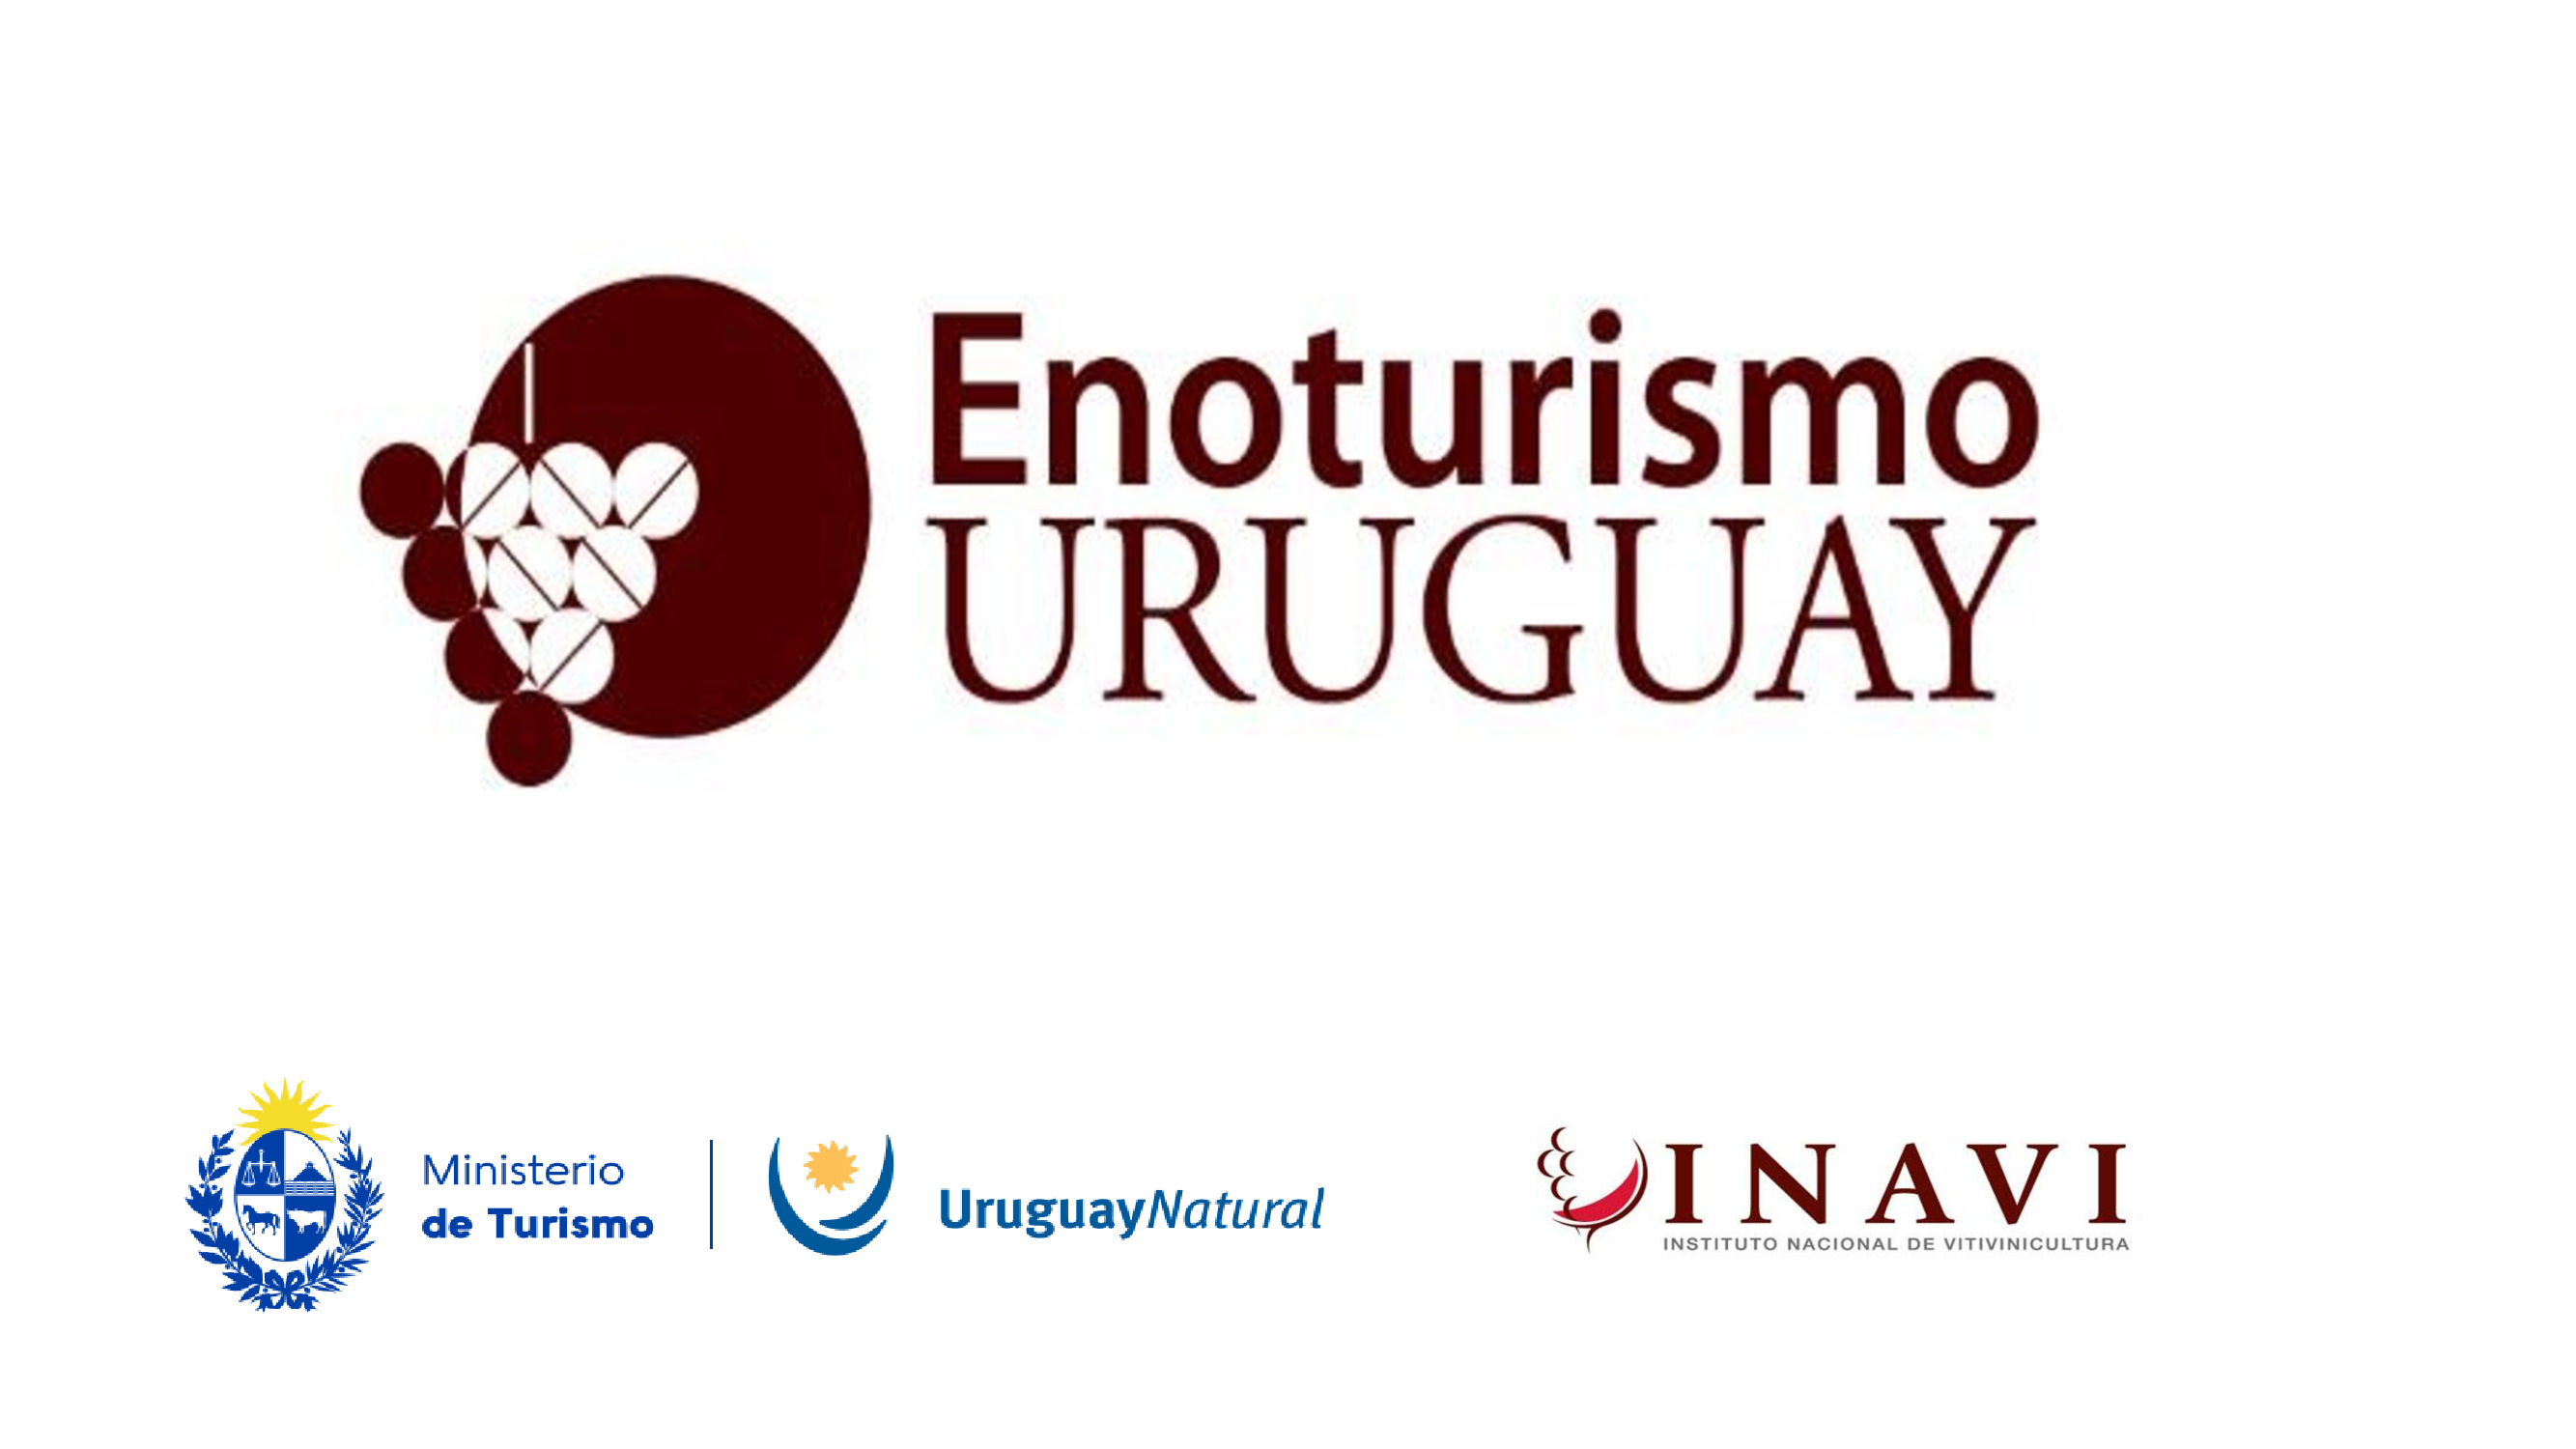 Enoturismo Uruguay